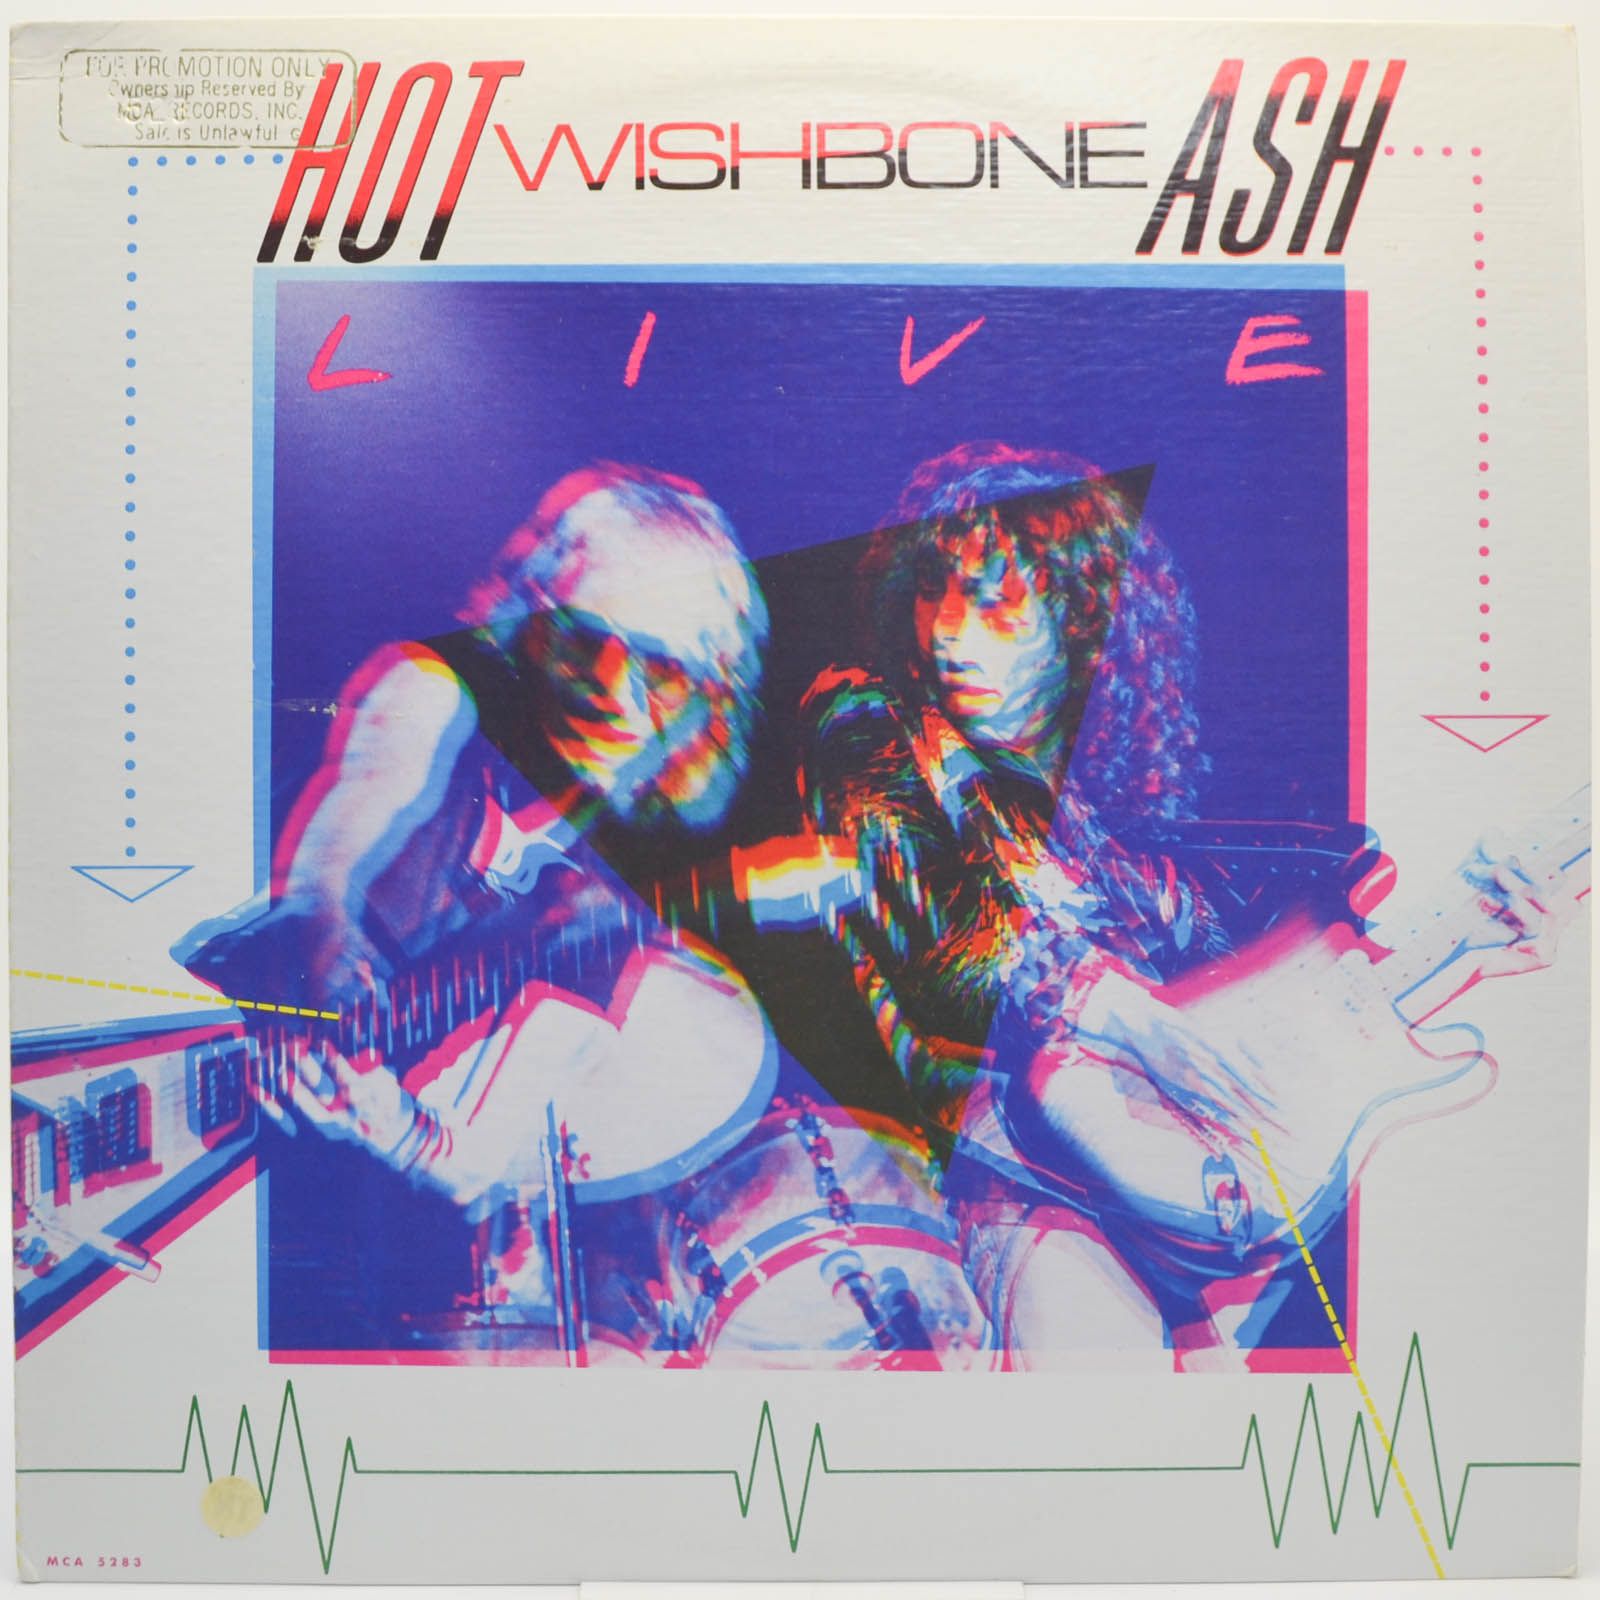 Wishbone Ash — Hot Ash Live (USA), 1981